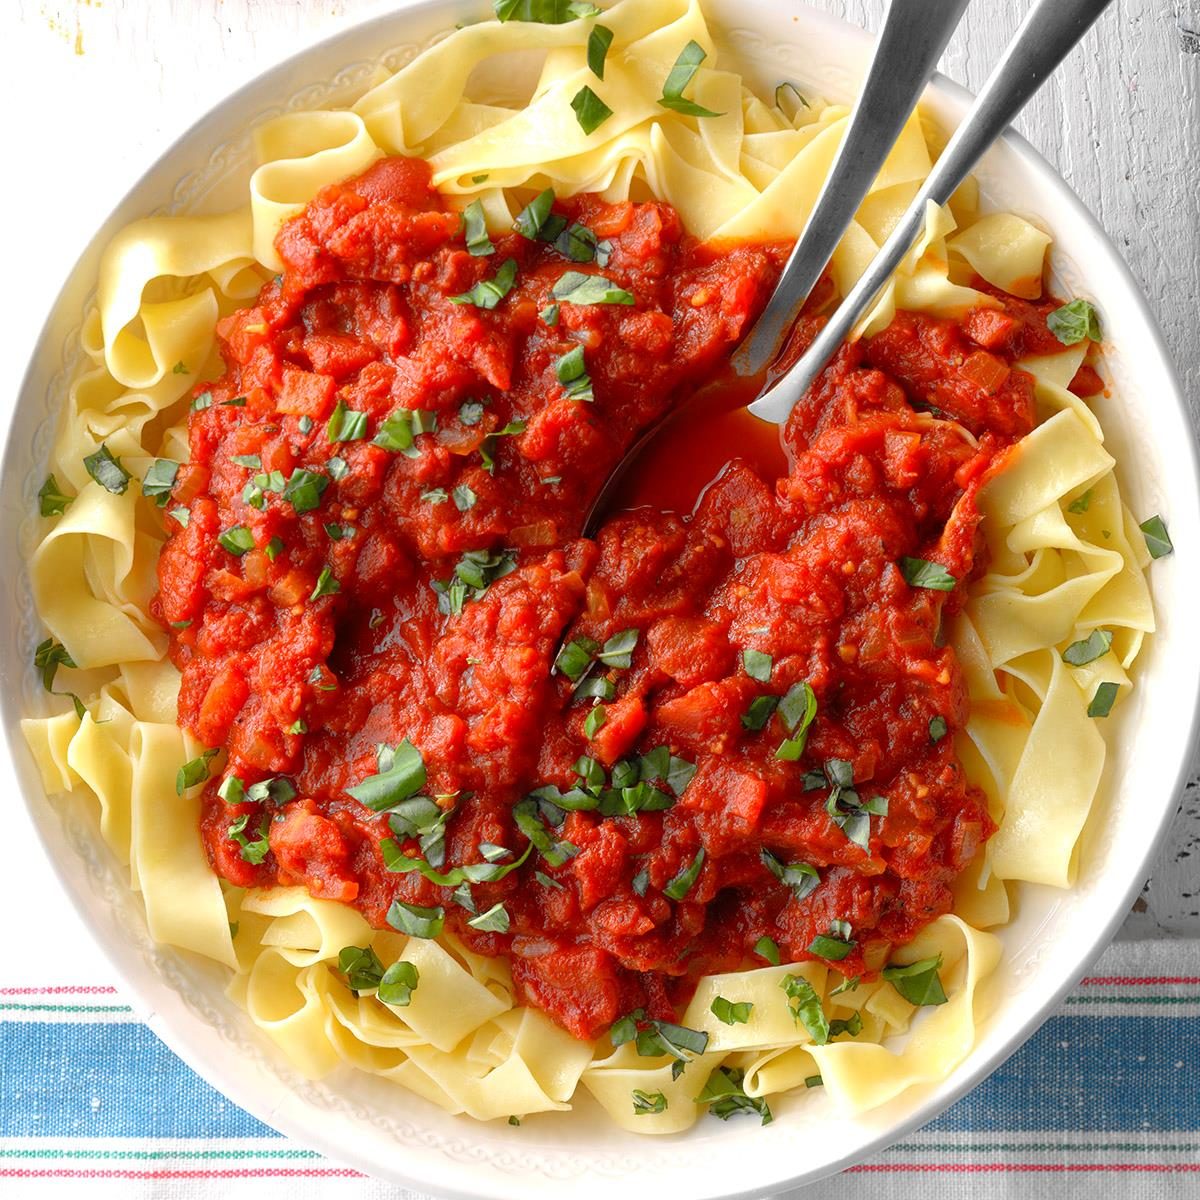 Homemade Meatless Spaghetti Sauce Recipe: How to Make It